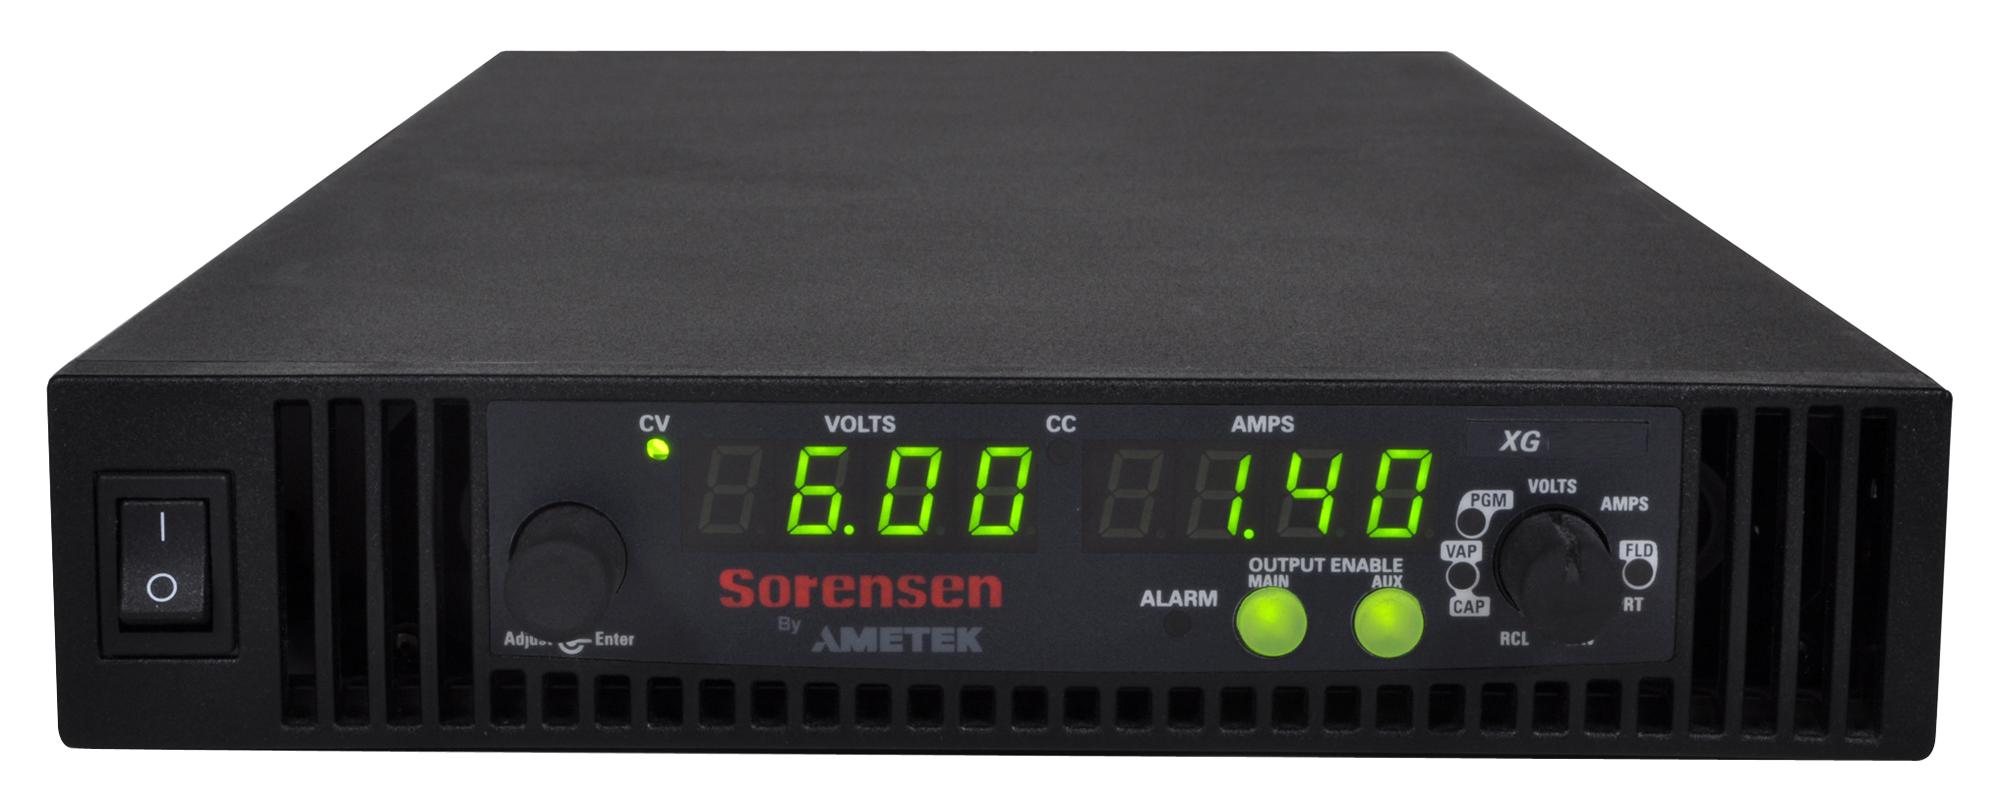 Ametek Programmable Power Xg 100-8.5Mebr Power Supply, Prog, 8.5A, 100V, 860W